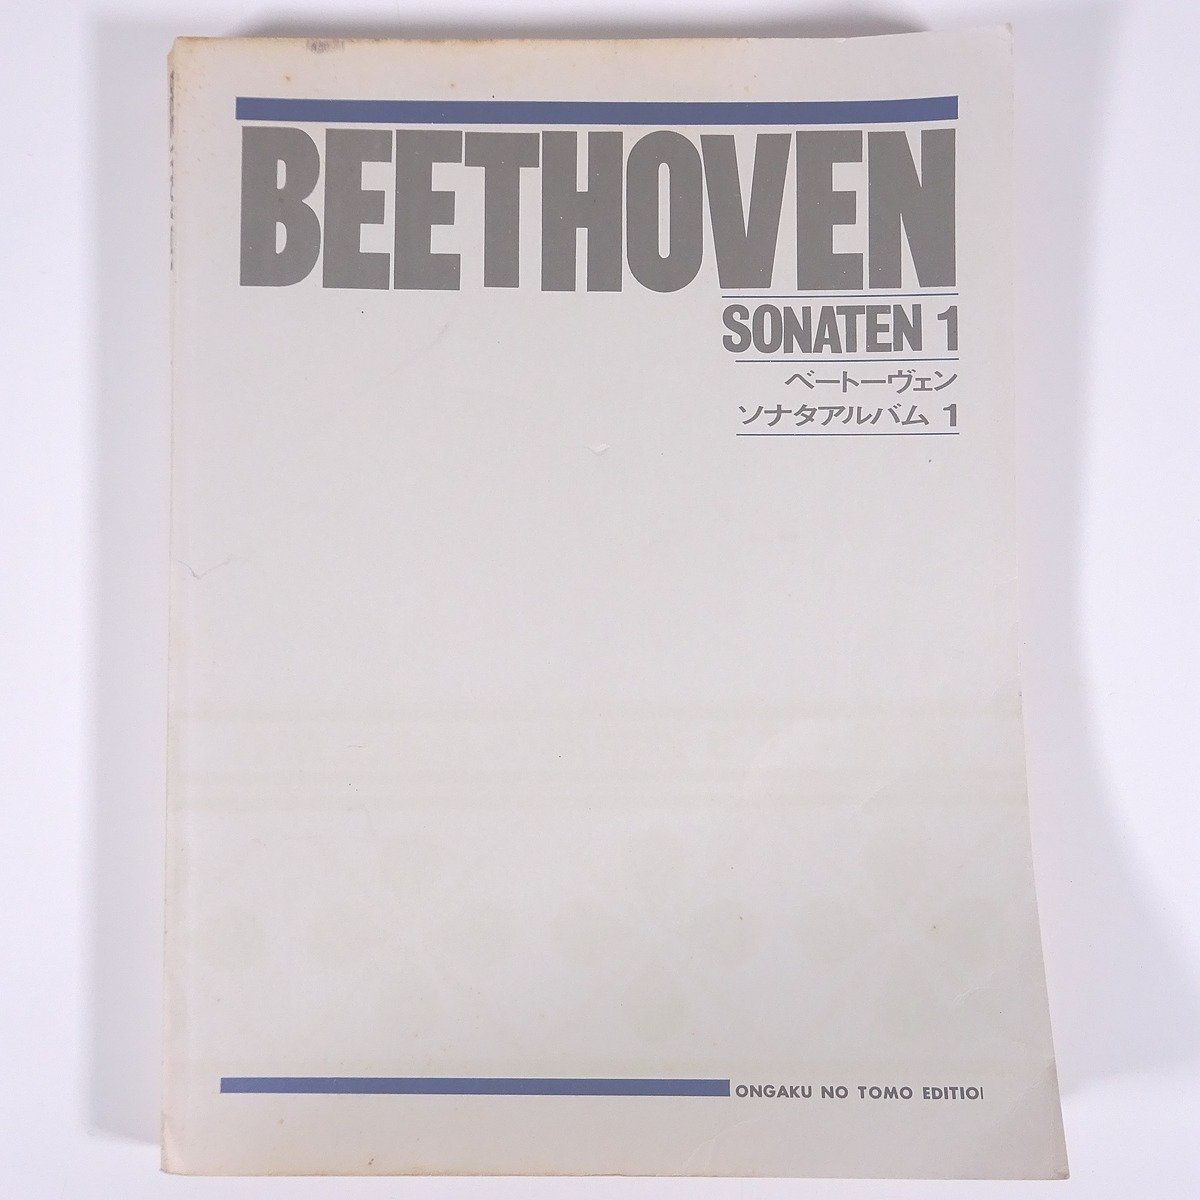 zaa m1aウィーン原典版 ベートーヴェン ピアノのための変奏曲集